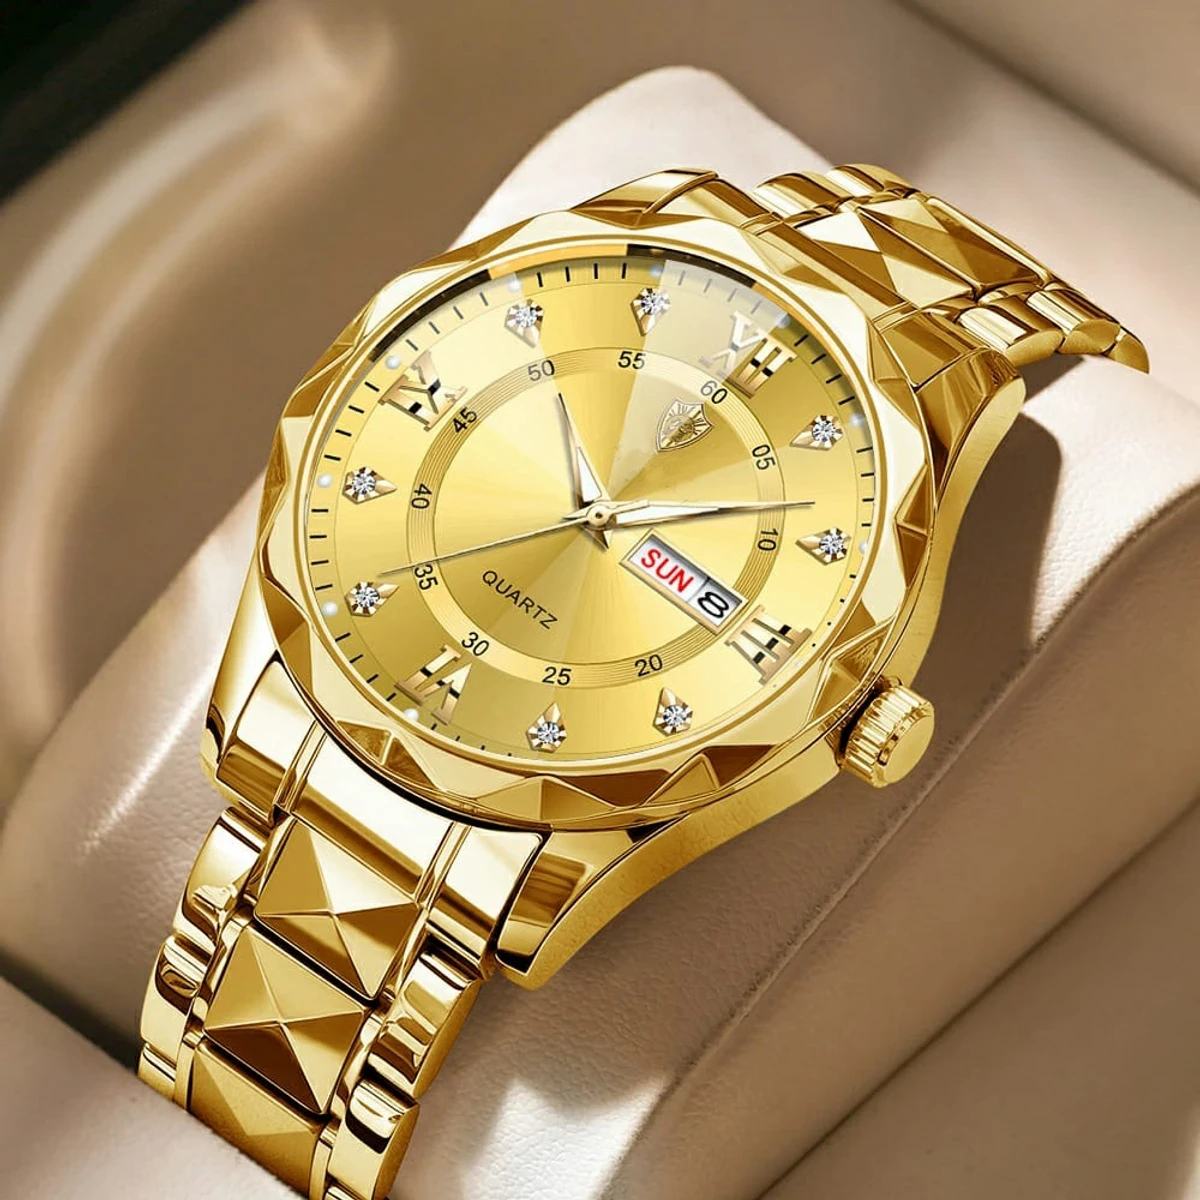 POEDAGAR Luxury Men Watches Business Top Brand Man Wristwatch Waterproof Luminous Date Week Quartz Men's Watch High Quality+Box-Golden